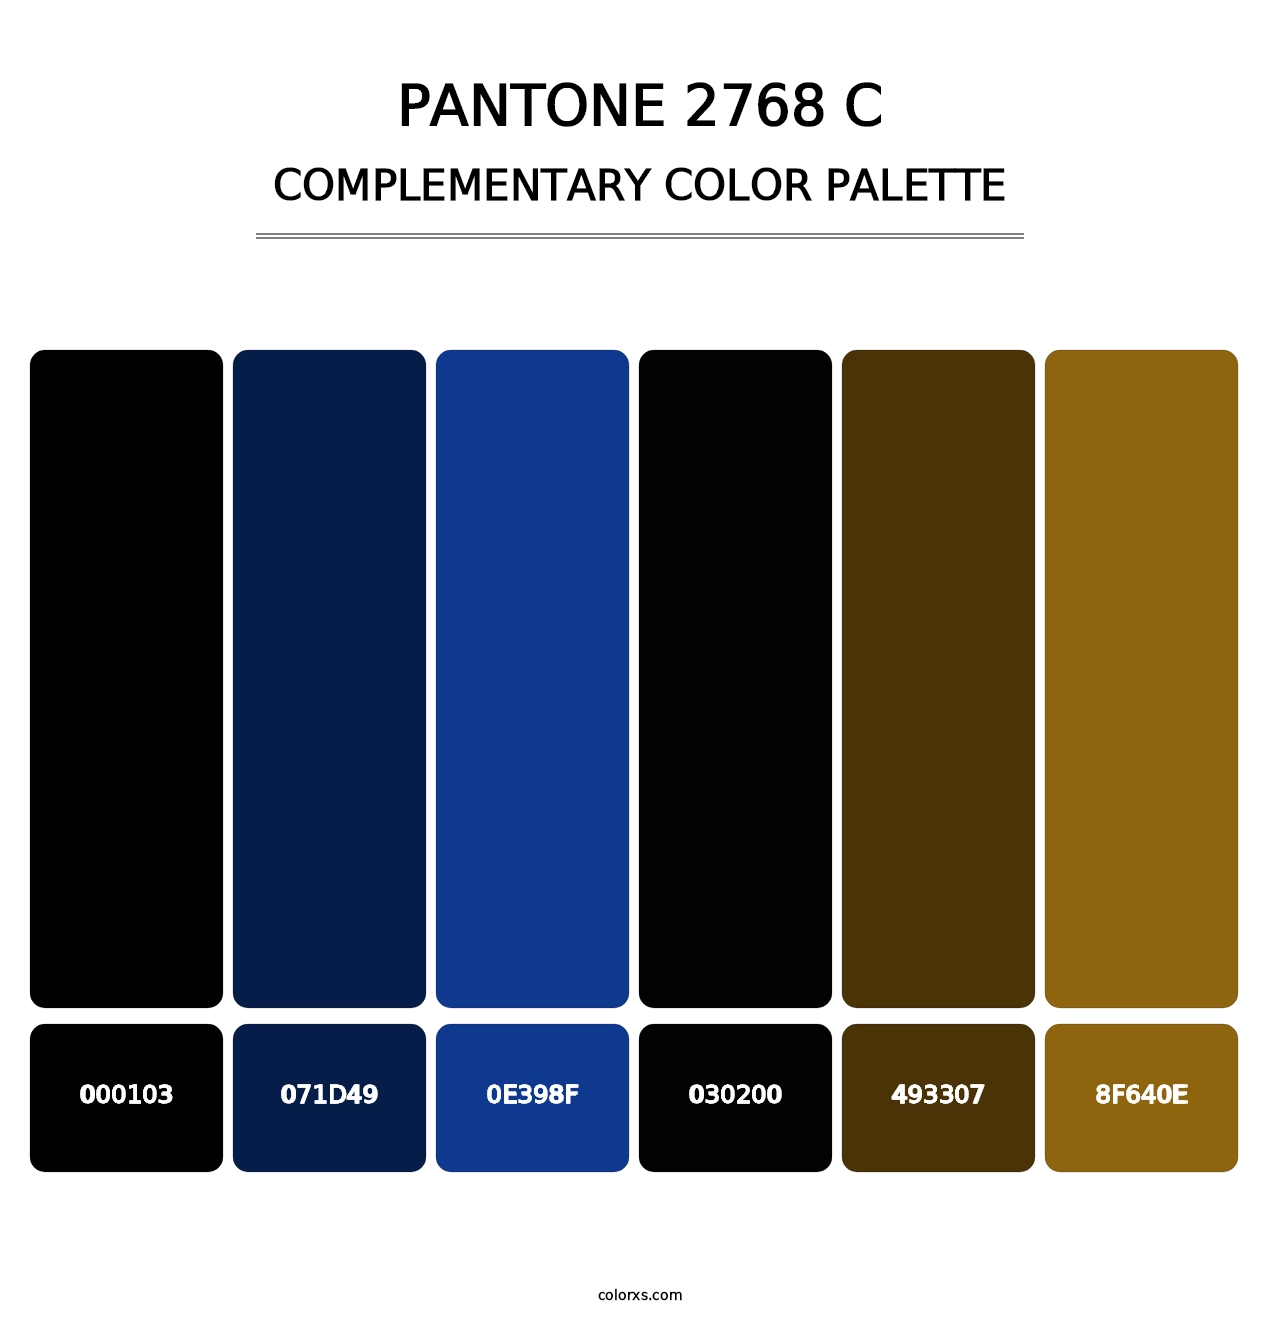 PANTONE 2768 C - Complementary Color Palette